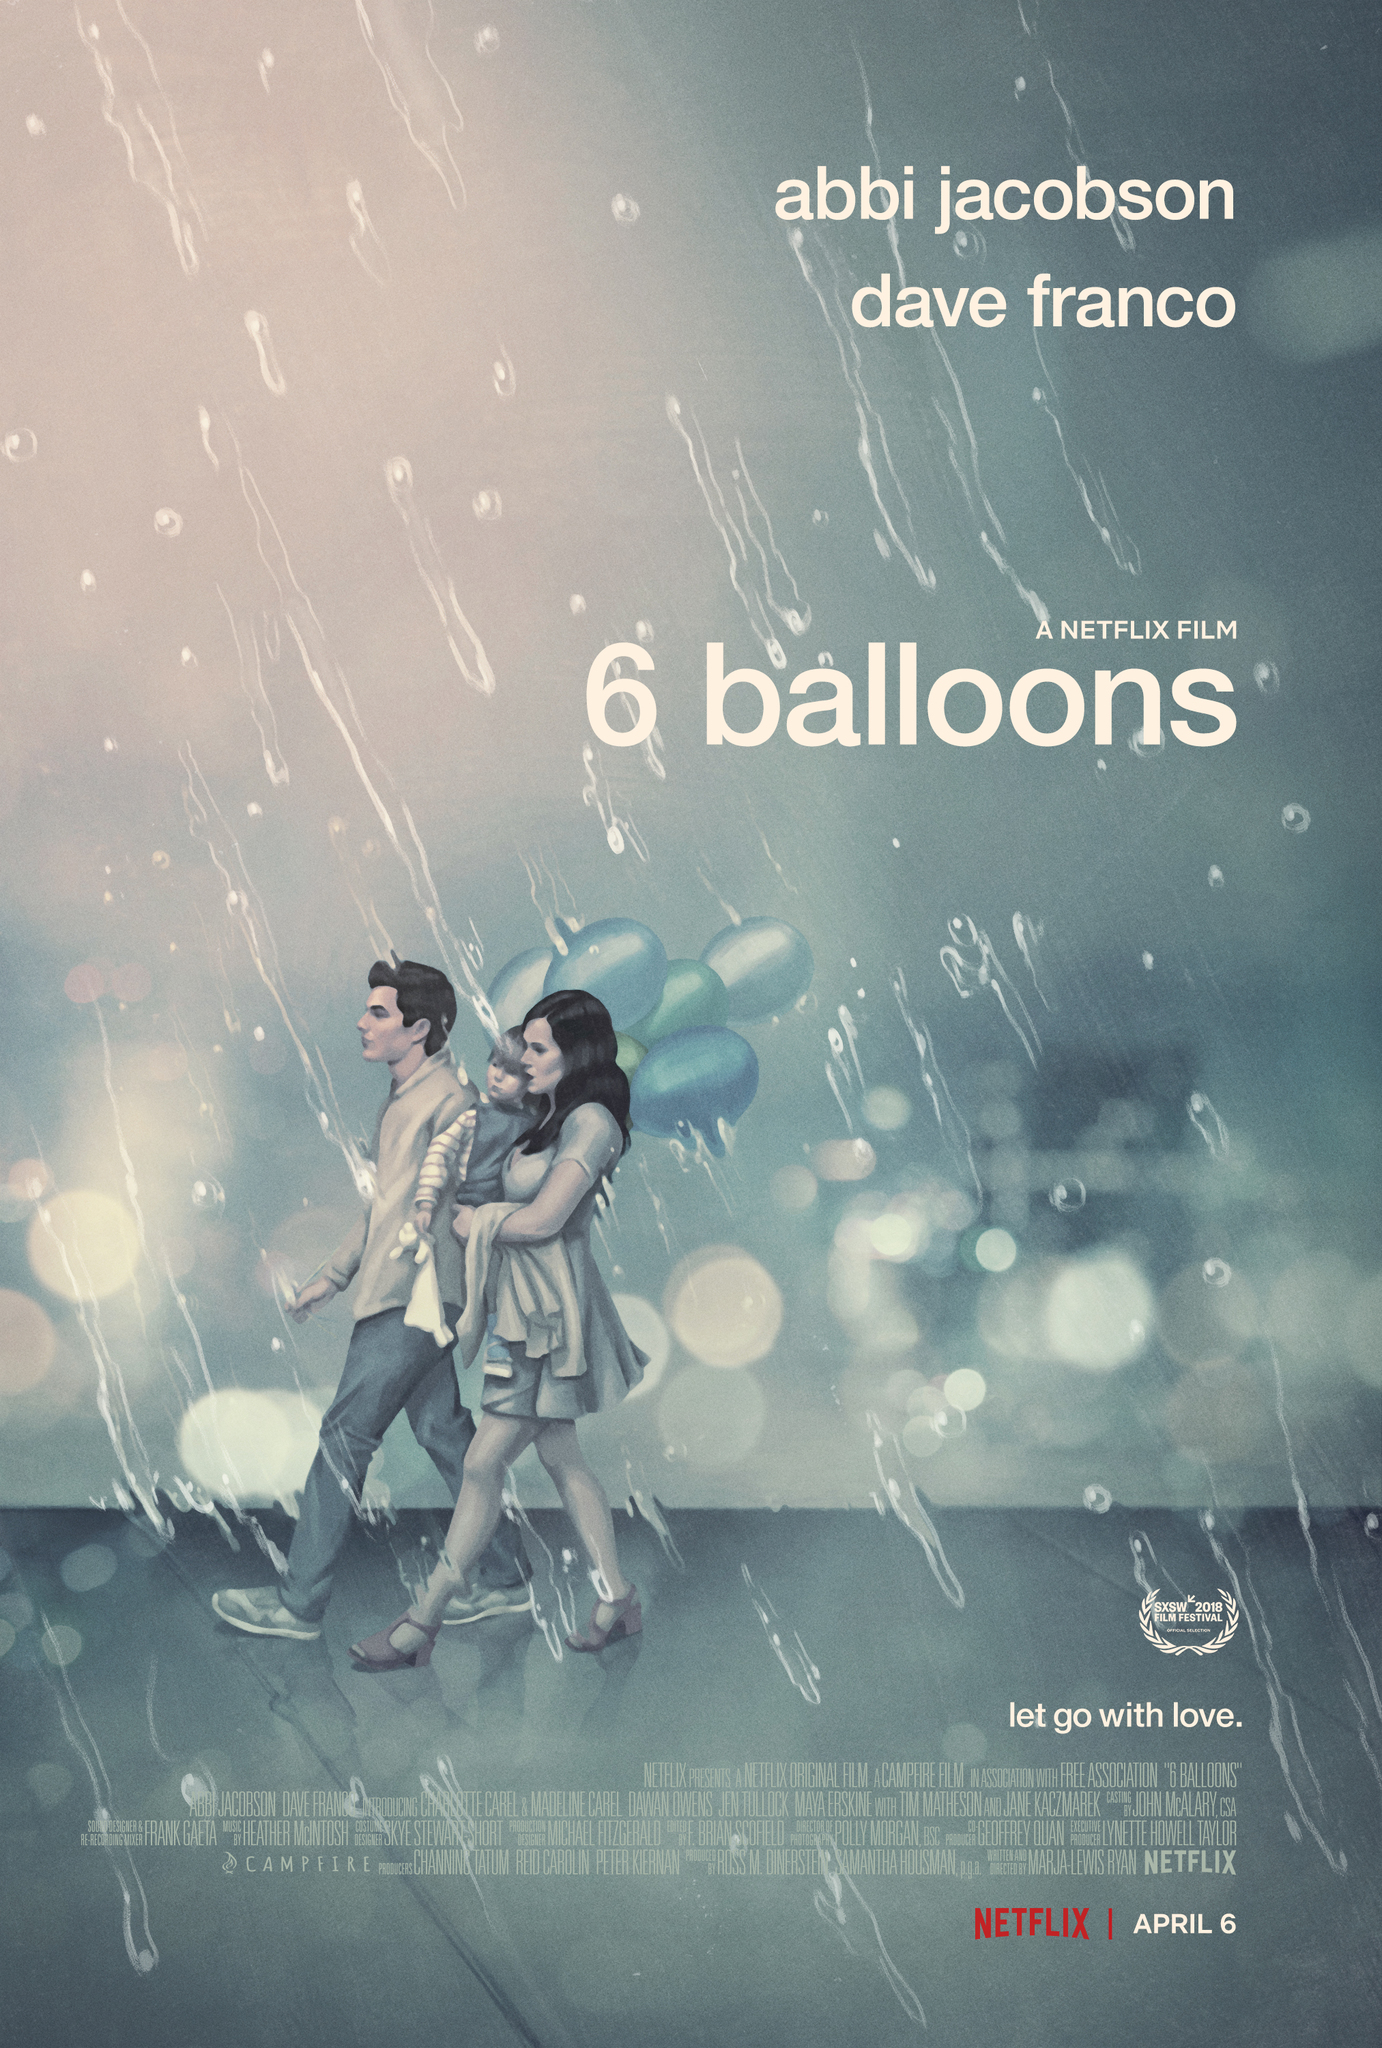 Nonton film 6 Balloons layarkaca21 indoxx1 ganool online streaming terbaru